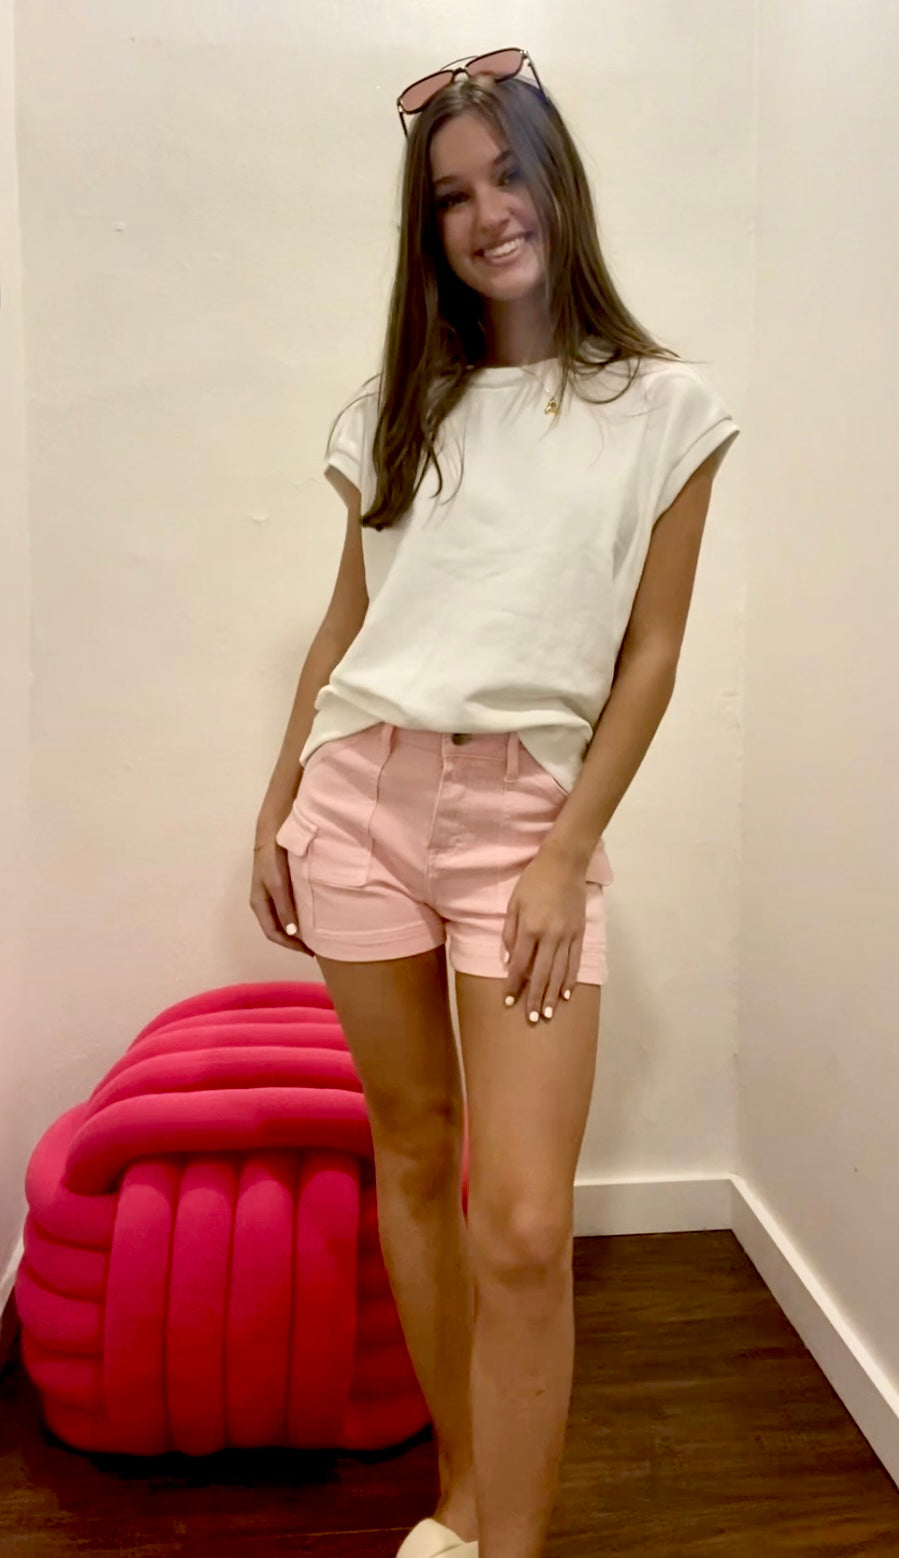 Pink Cargo Shorts